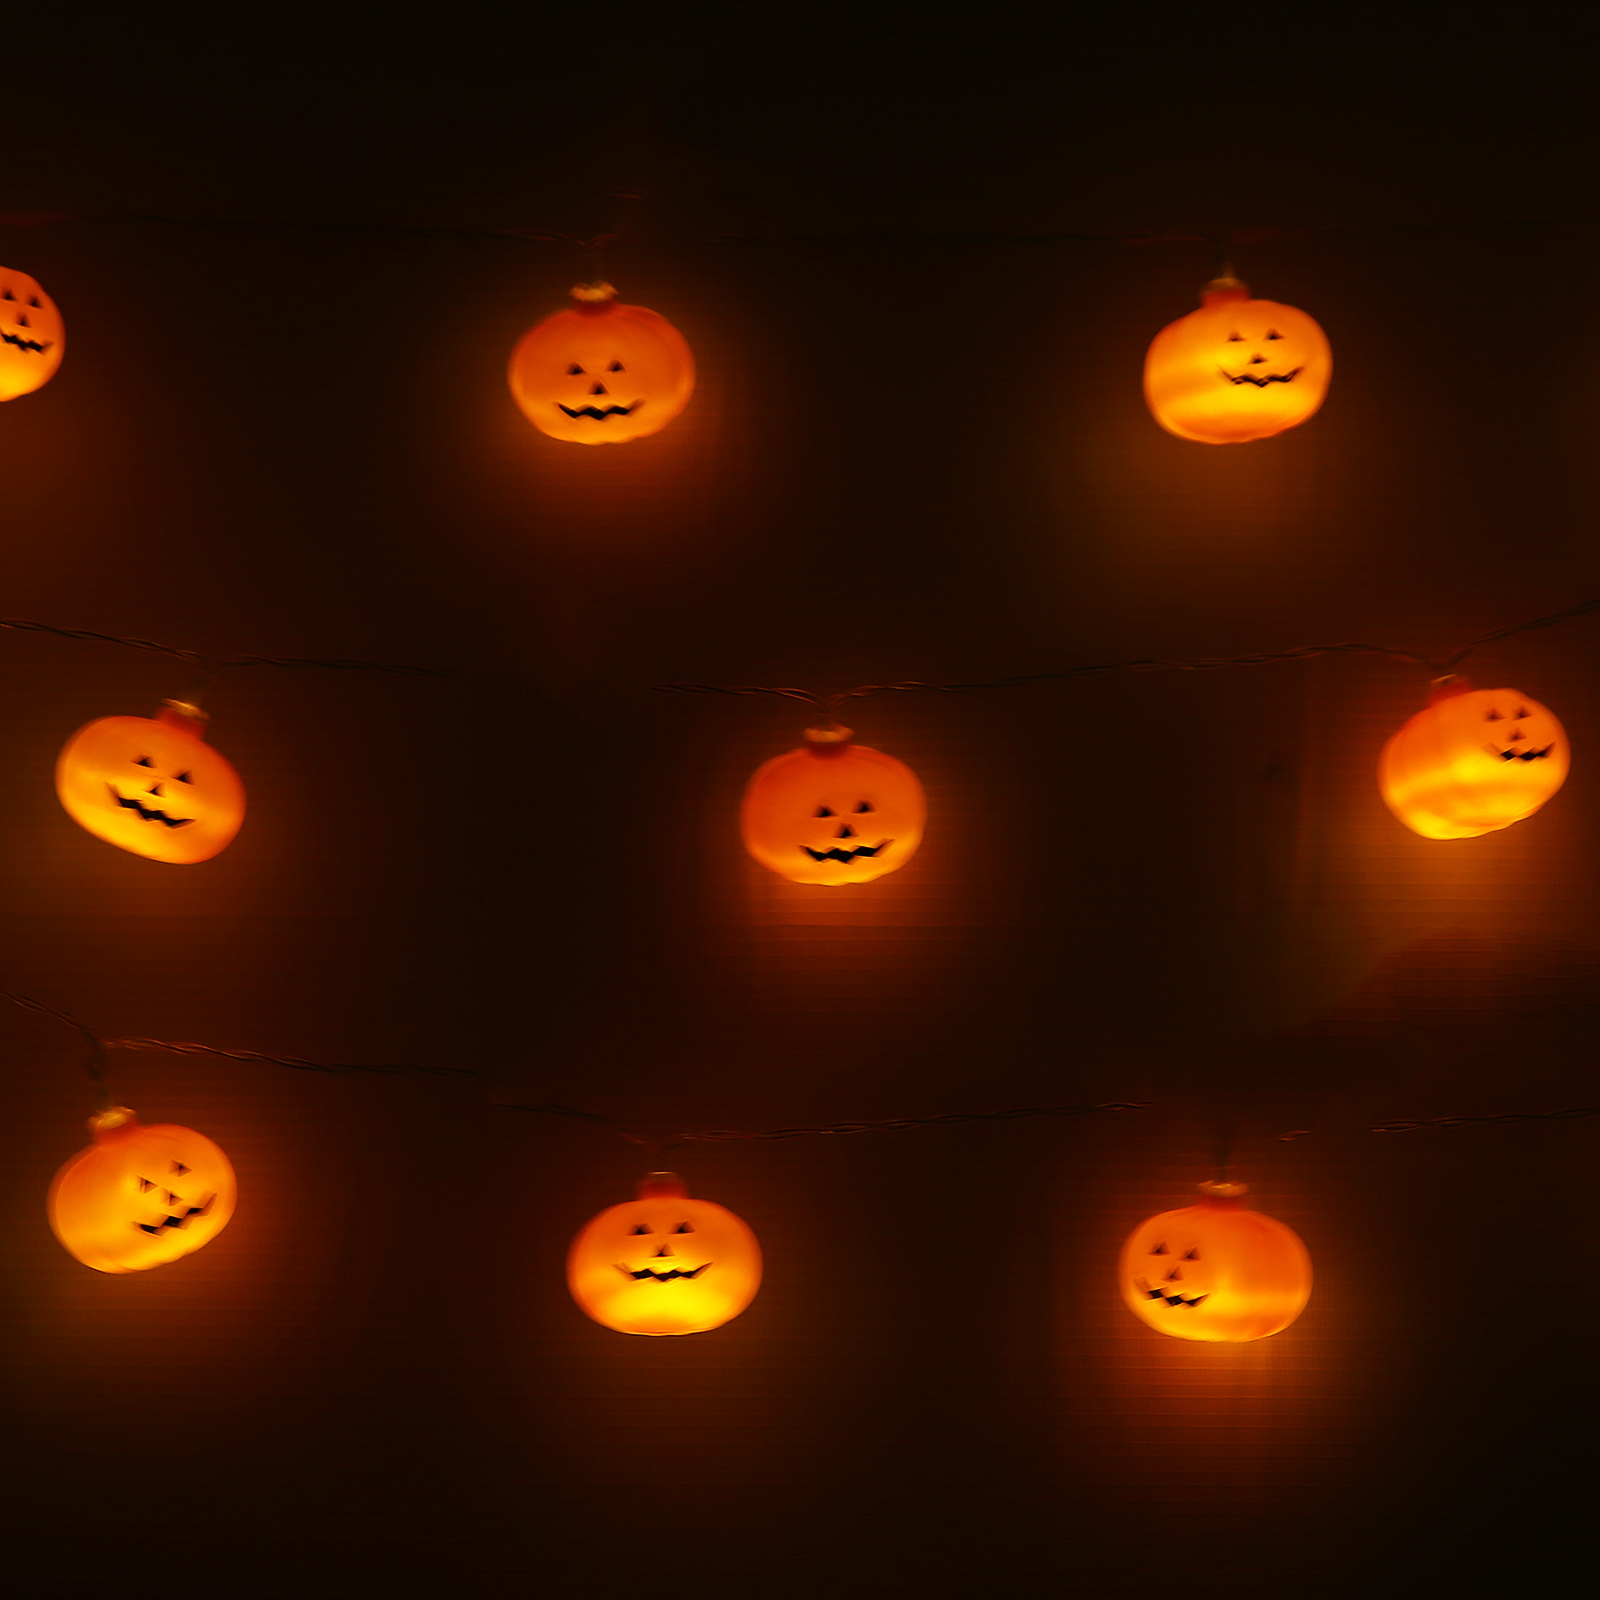 98ft-Halloween-Decorations-20-LED-Pumpkin-String-Lights-Home-Garden-Decor-Warm-White-1890365-8